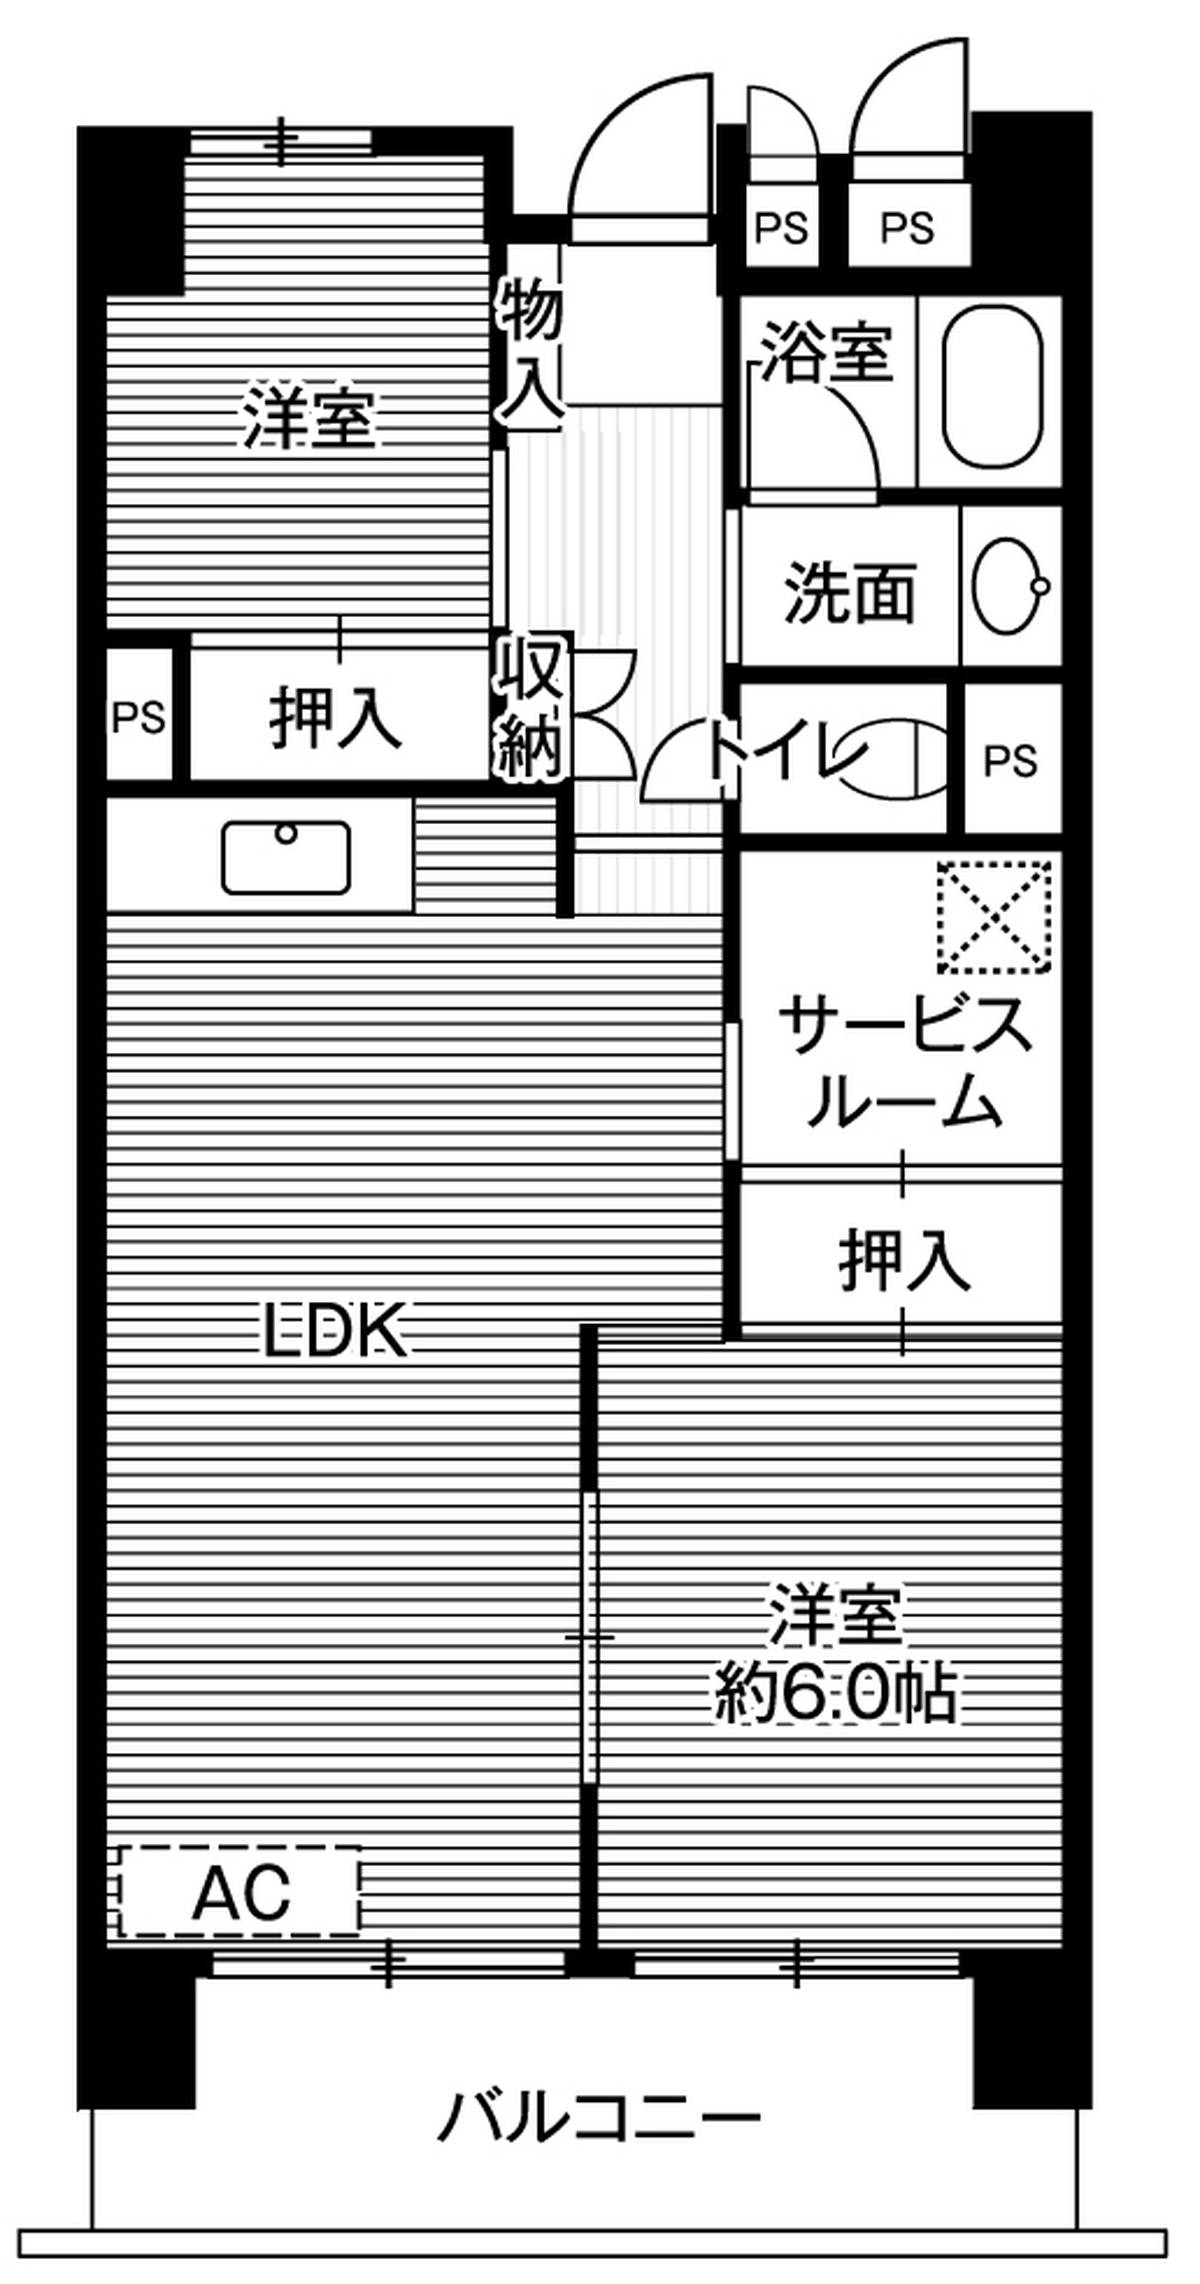 2SLDK floorplan of Village House Narita Azuma Tower in Narita-shi